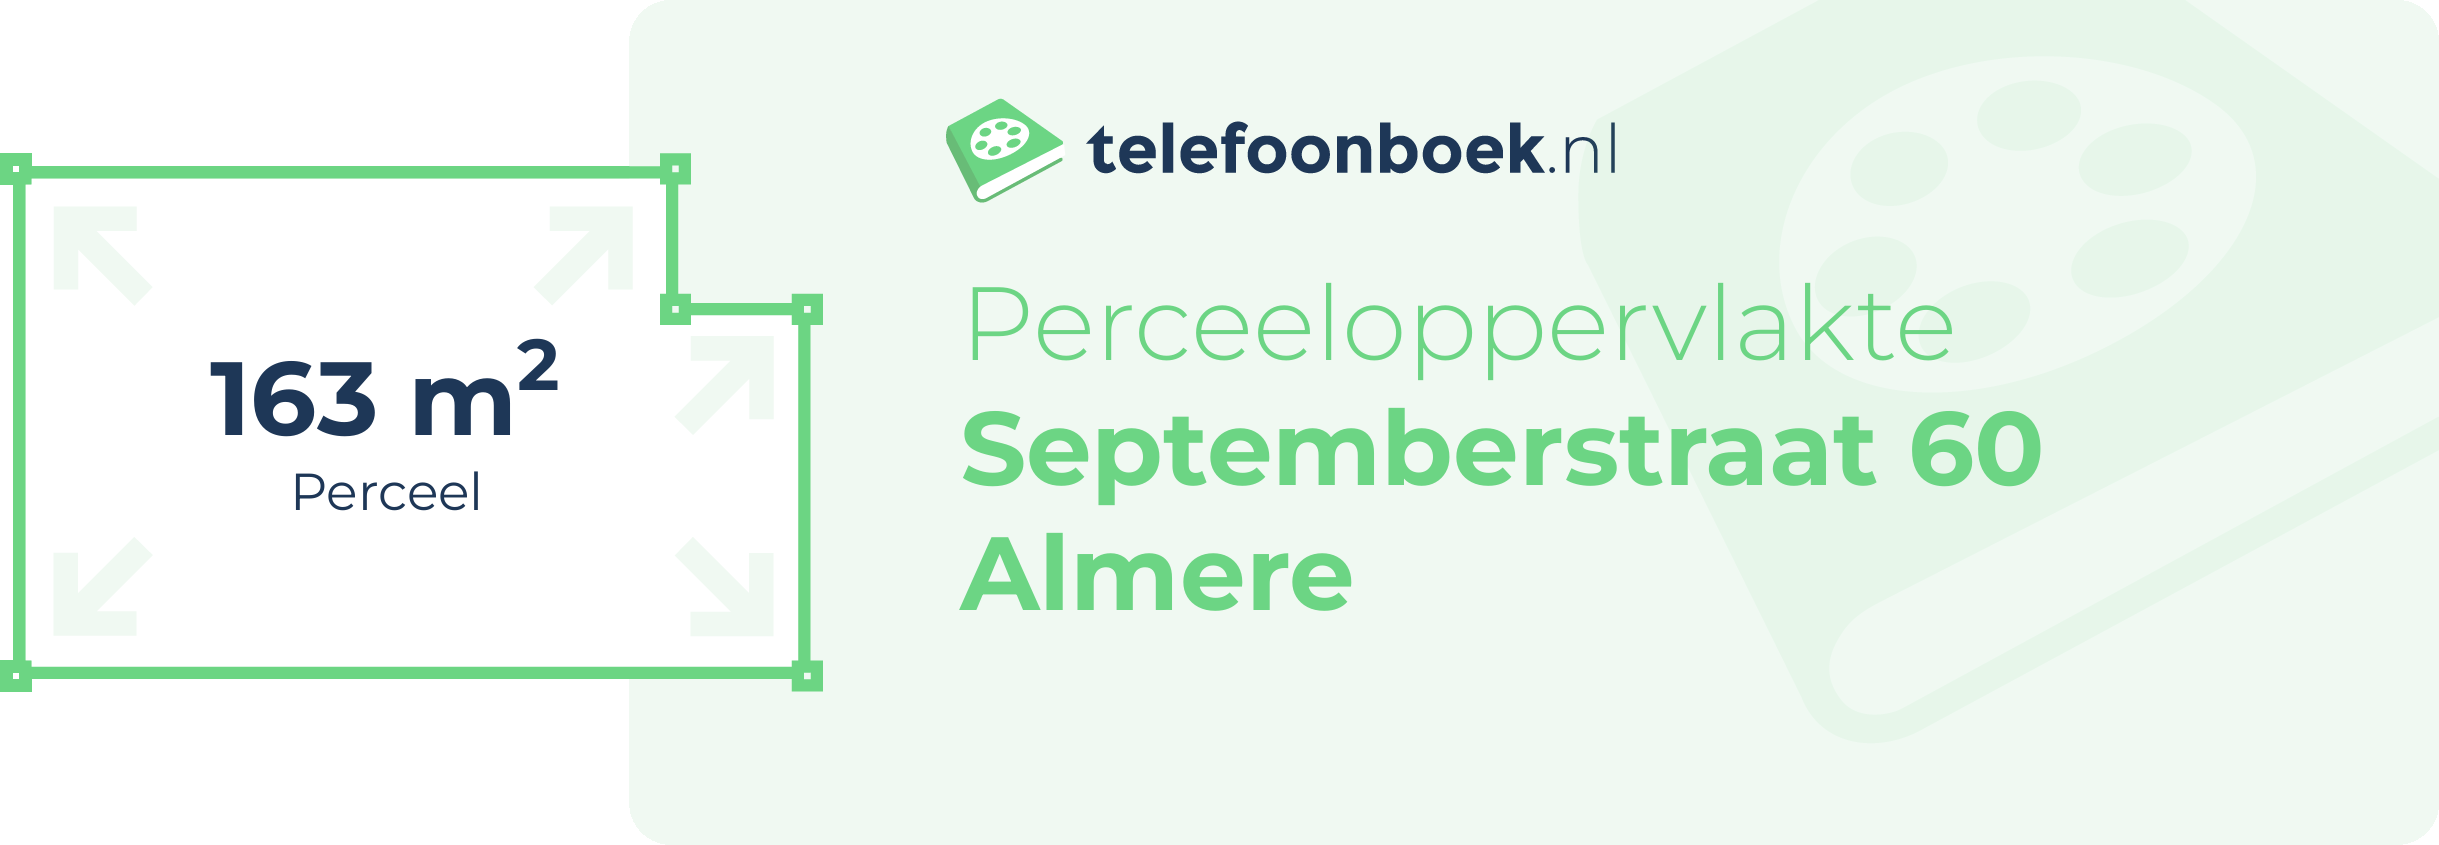 Perceeloppervlakte Septemberstraat 60 Almere